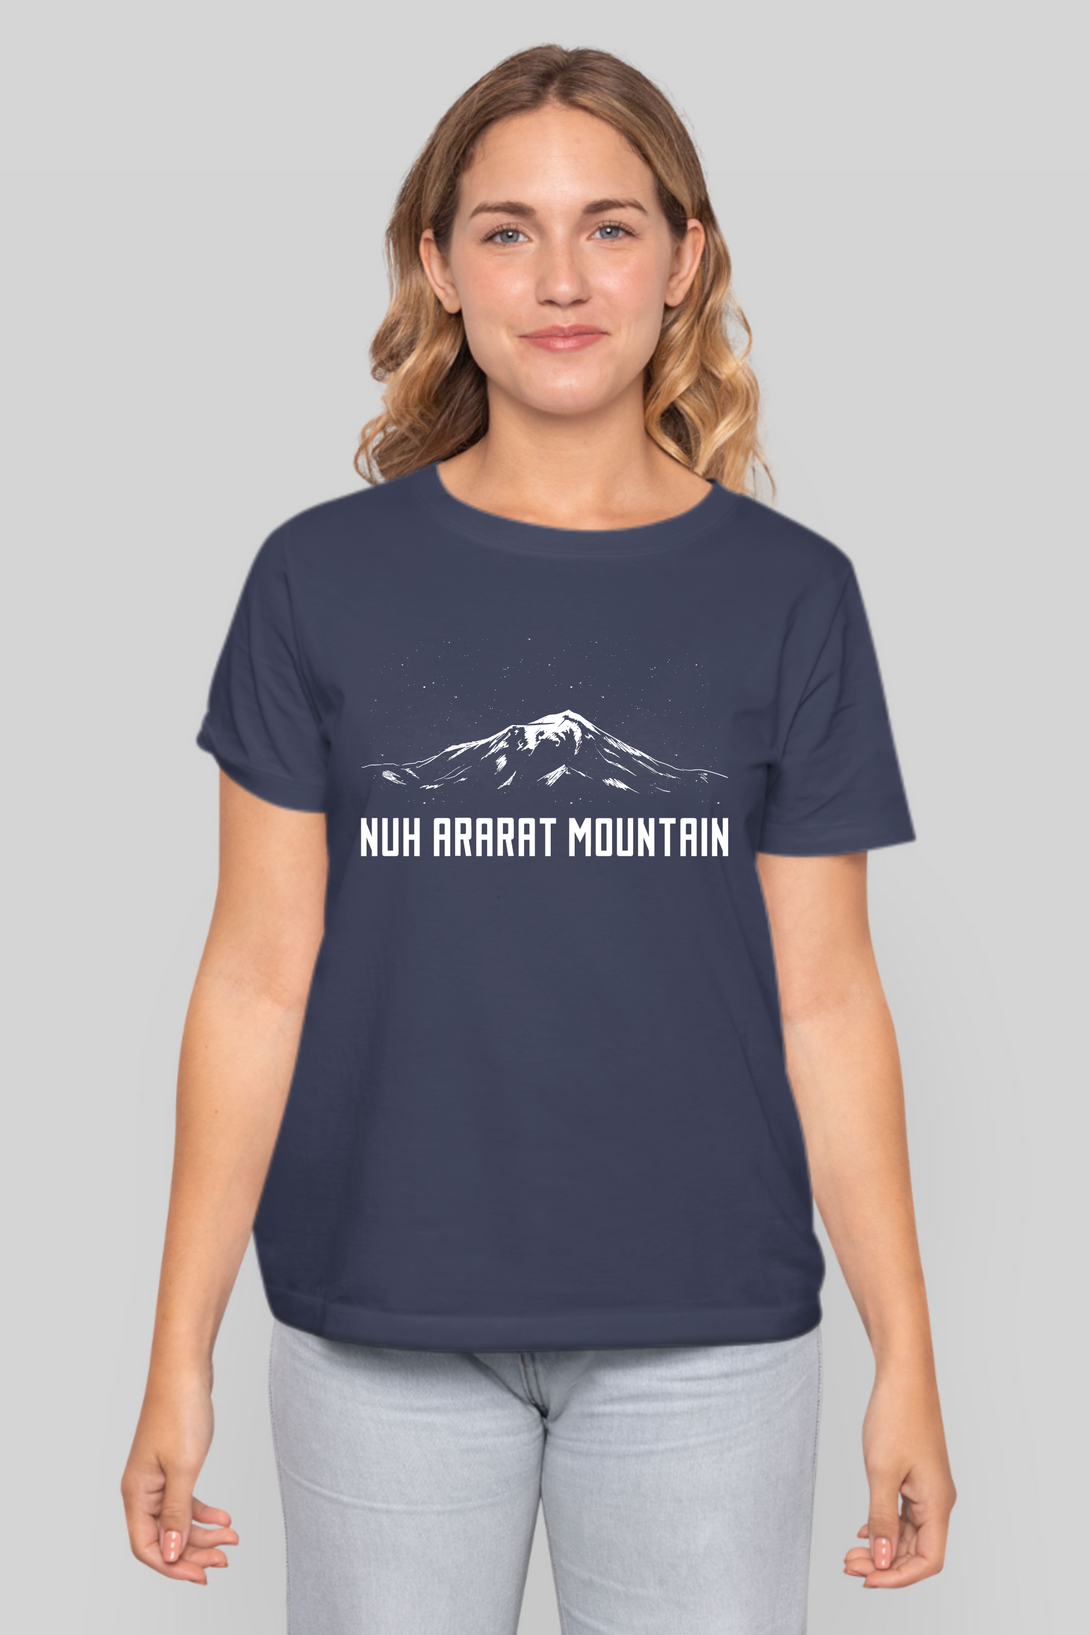 Nuh Ararat Mountain Printed T-Shirt For Women - WowWaves - 7